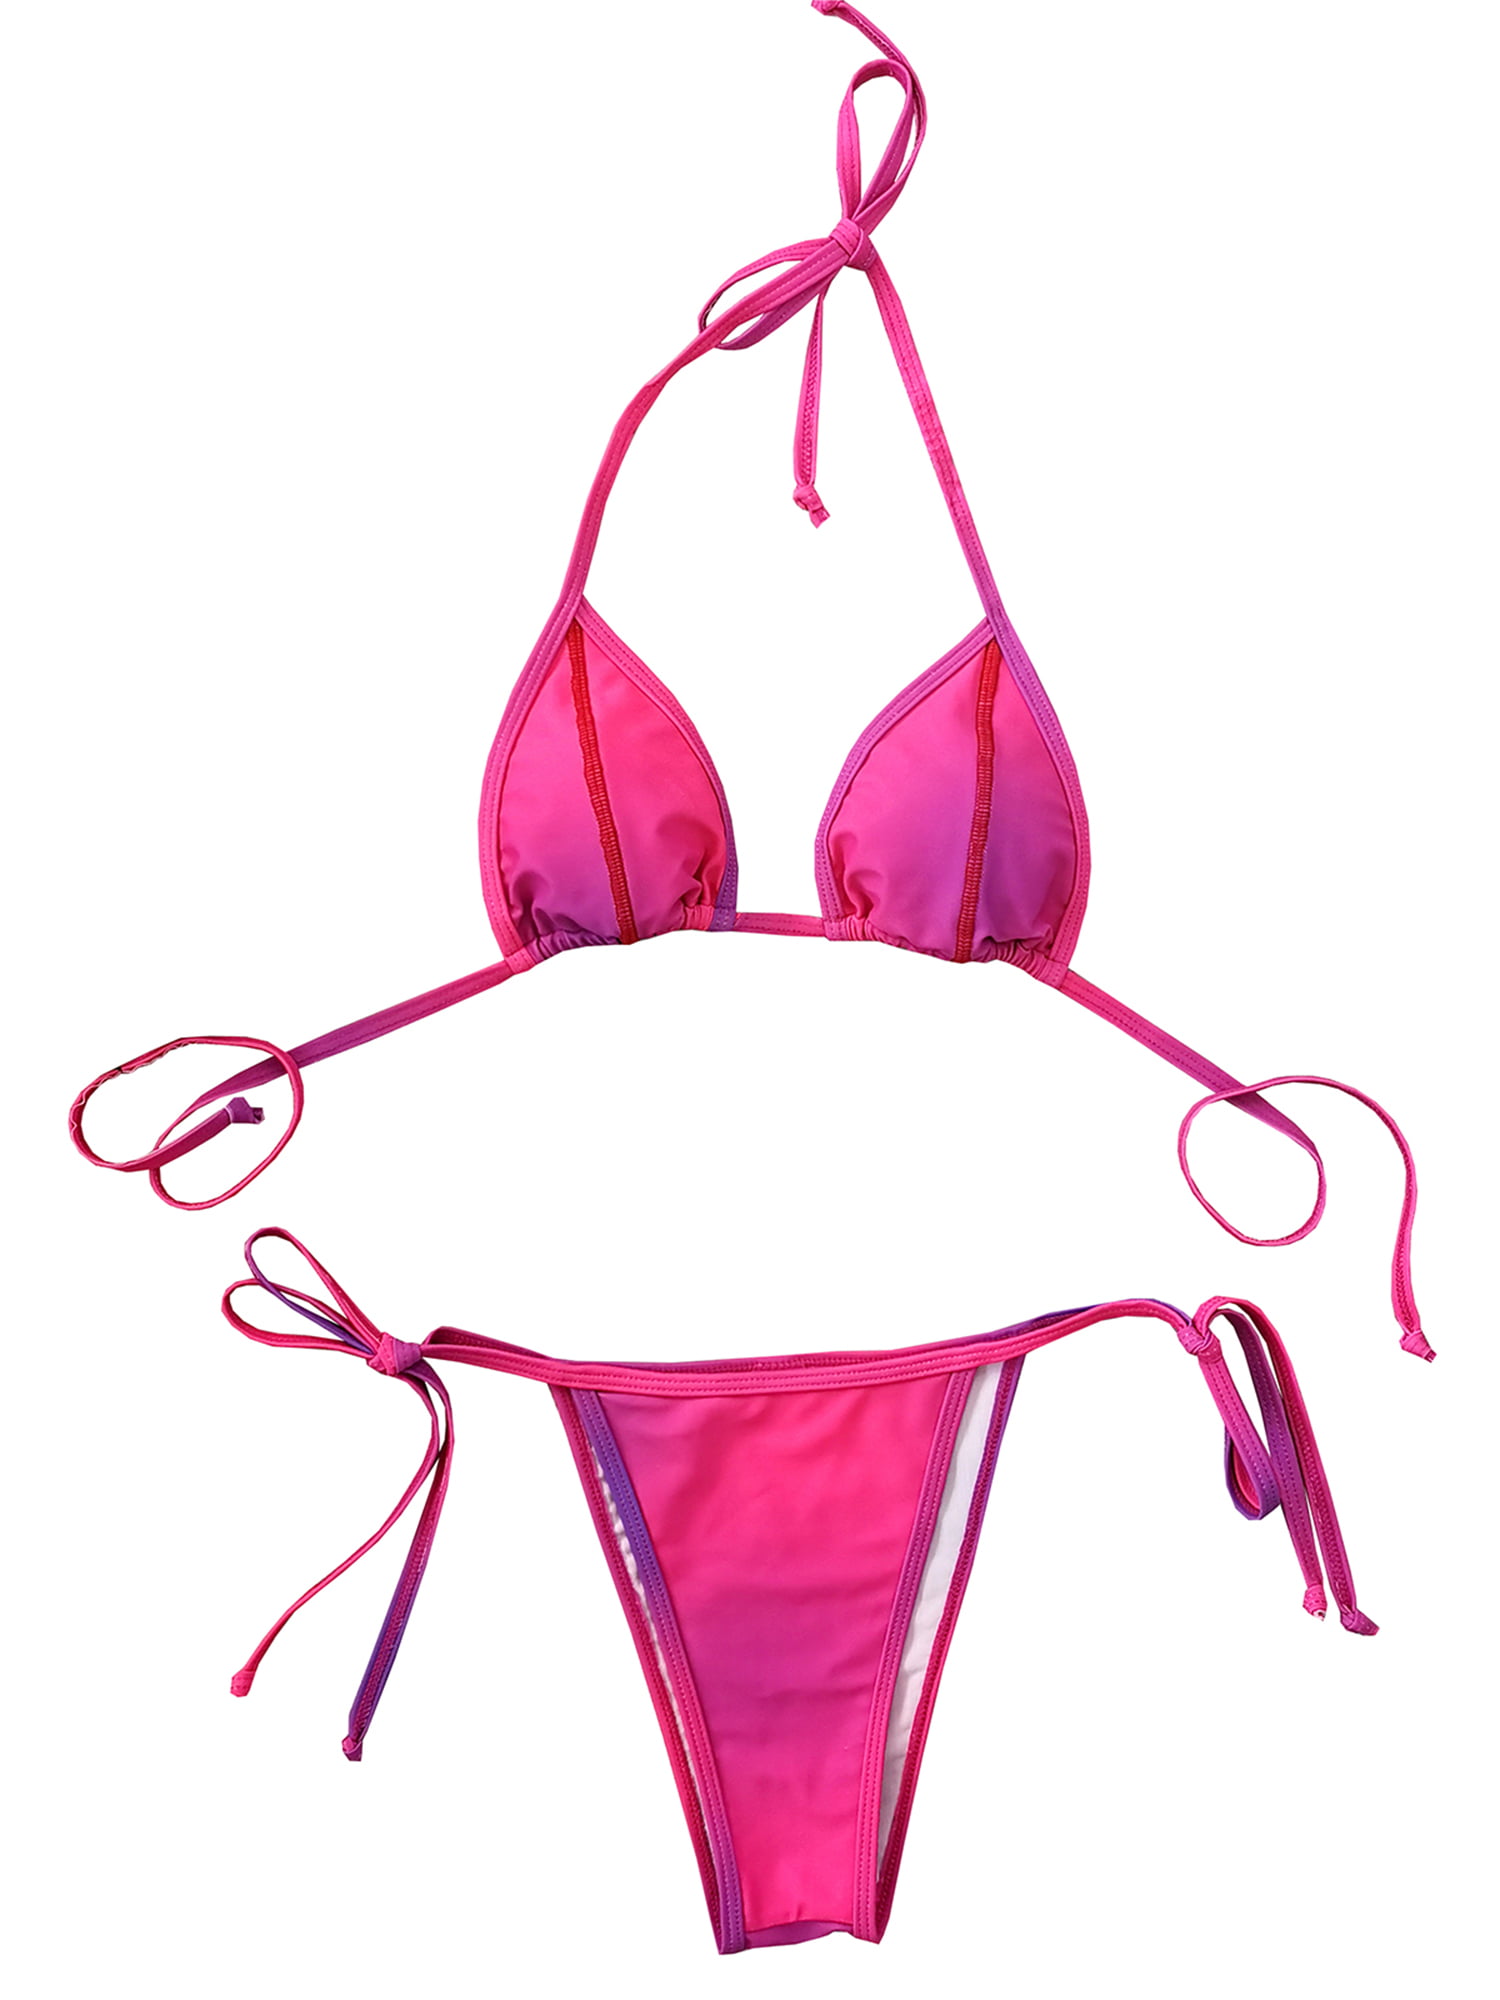 RYRJJ Women's Two Piece Swimsuit Smocked V-Neck Top with Hight Waist Cutout  Bottoms Bikini Set Push Up Beach Bathing Suit(Hot Pink,L)